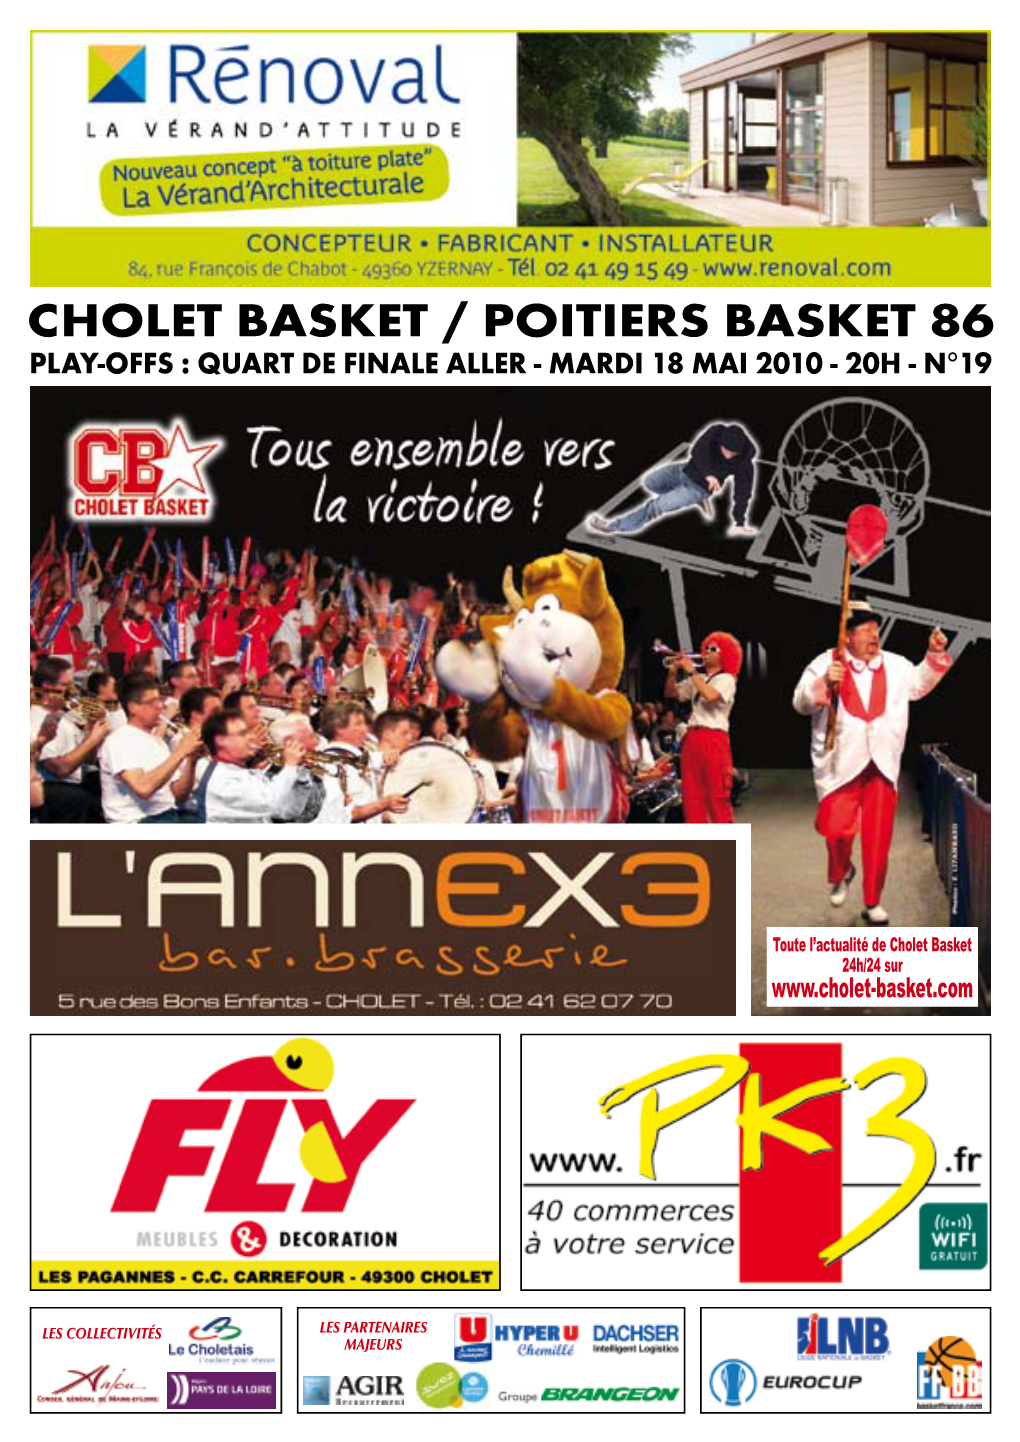 Cholet Basket / Poitiers Basket 86 Play-Offs : Quart De Finale Aller - Mardi 18 Mai 2010 - 20H - N°19